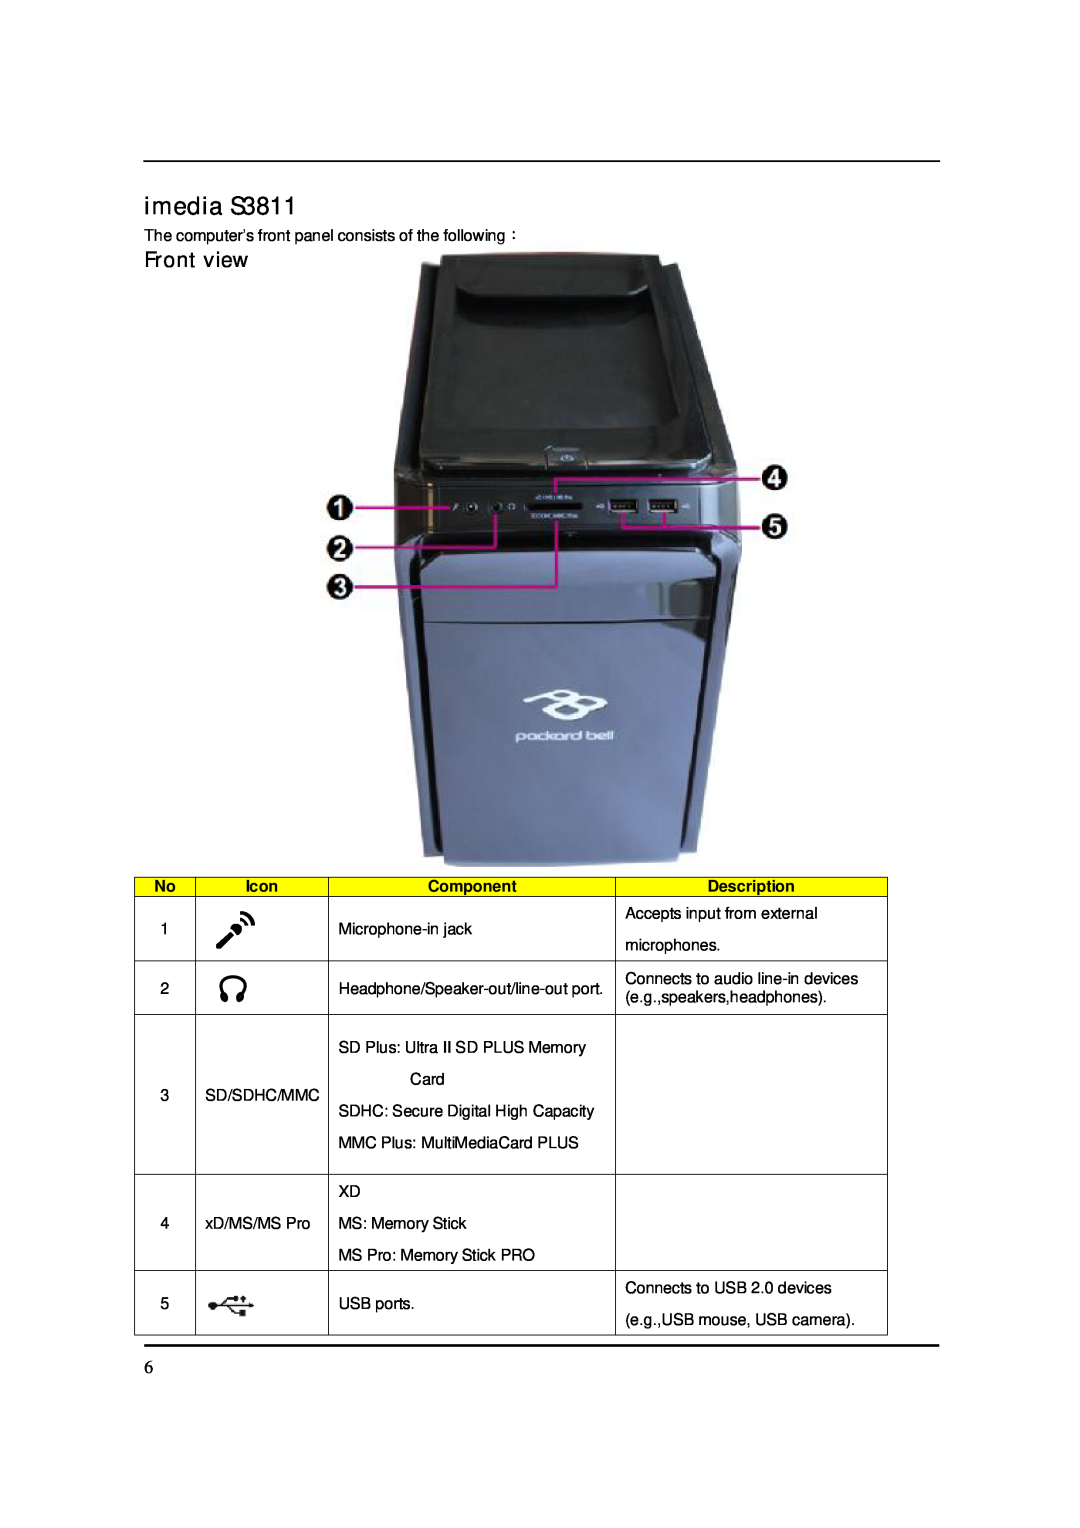 Acer manual imedia S3811, Front view, Icon, Component, Description 